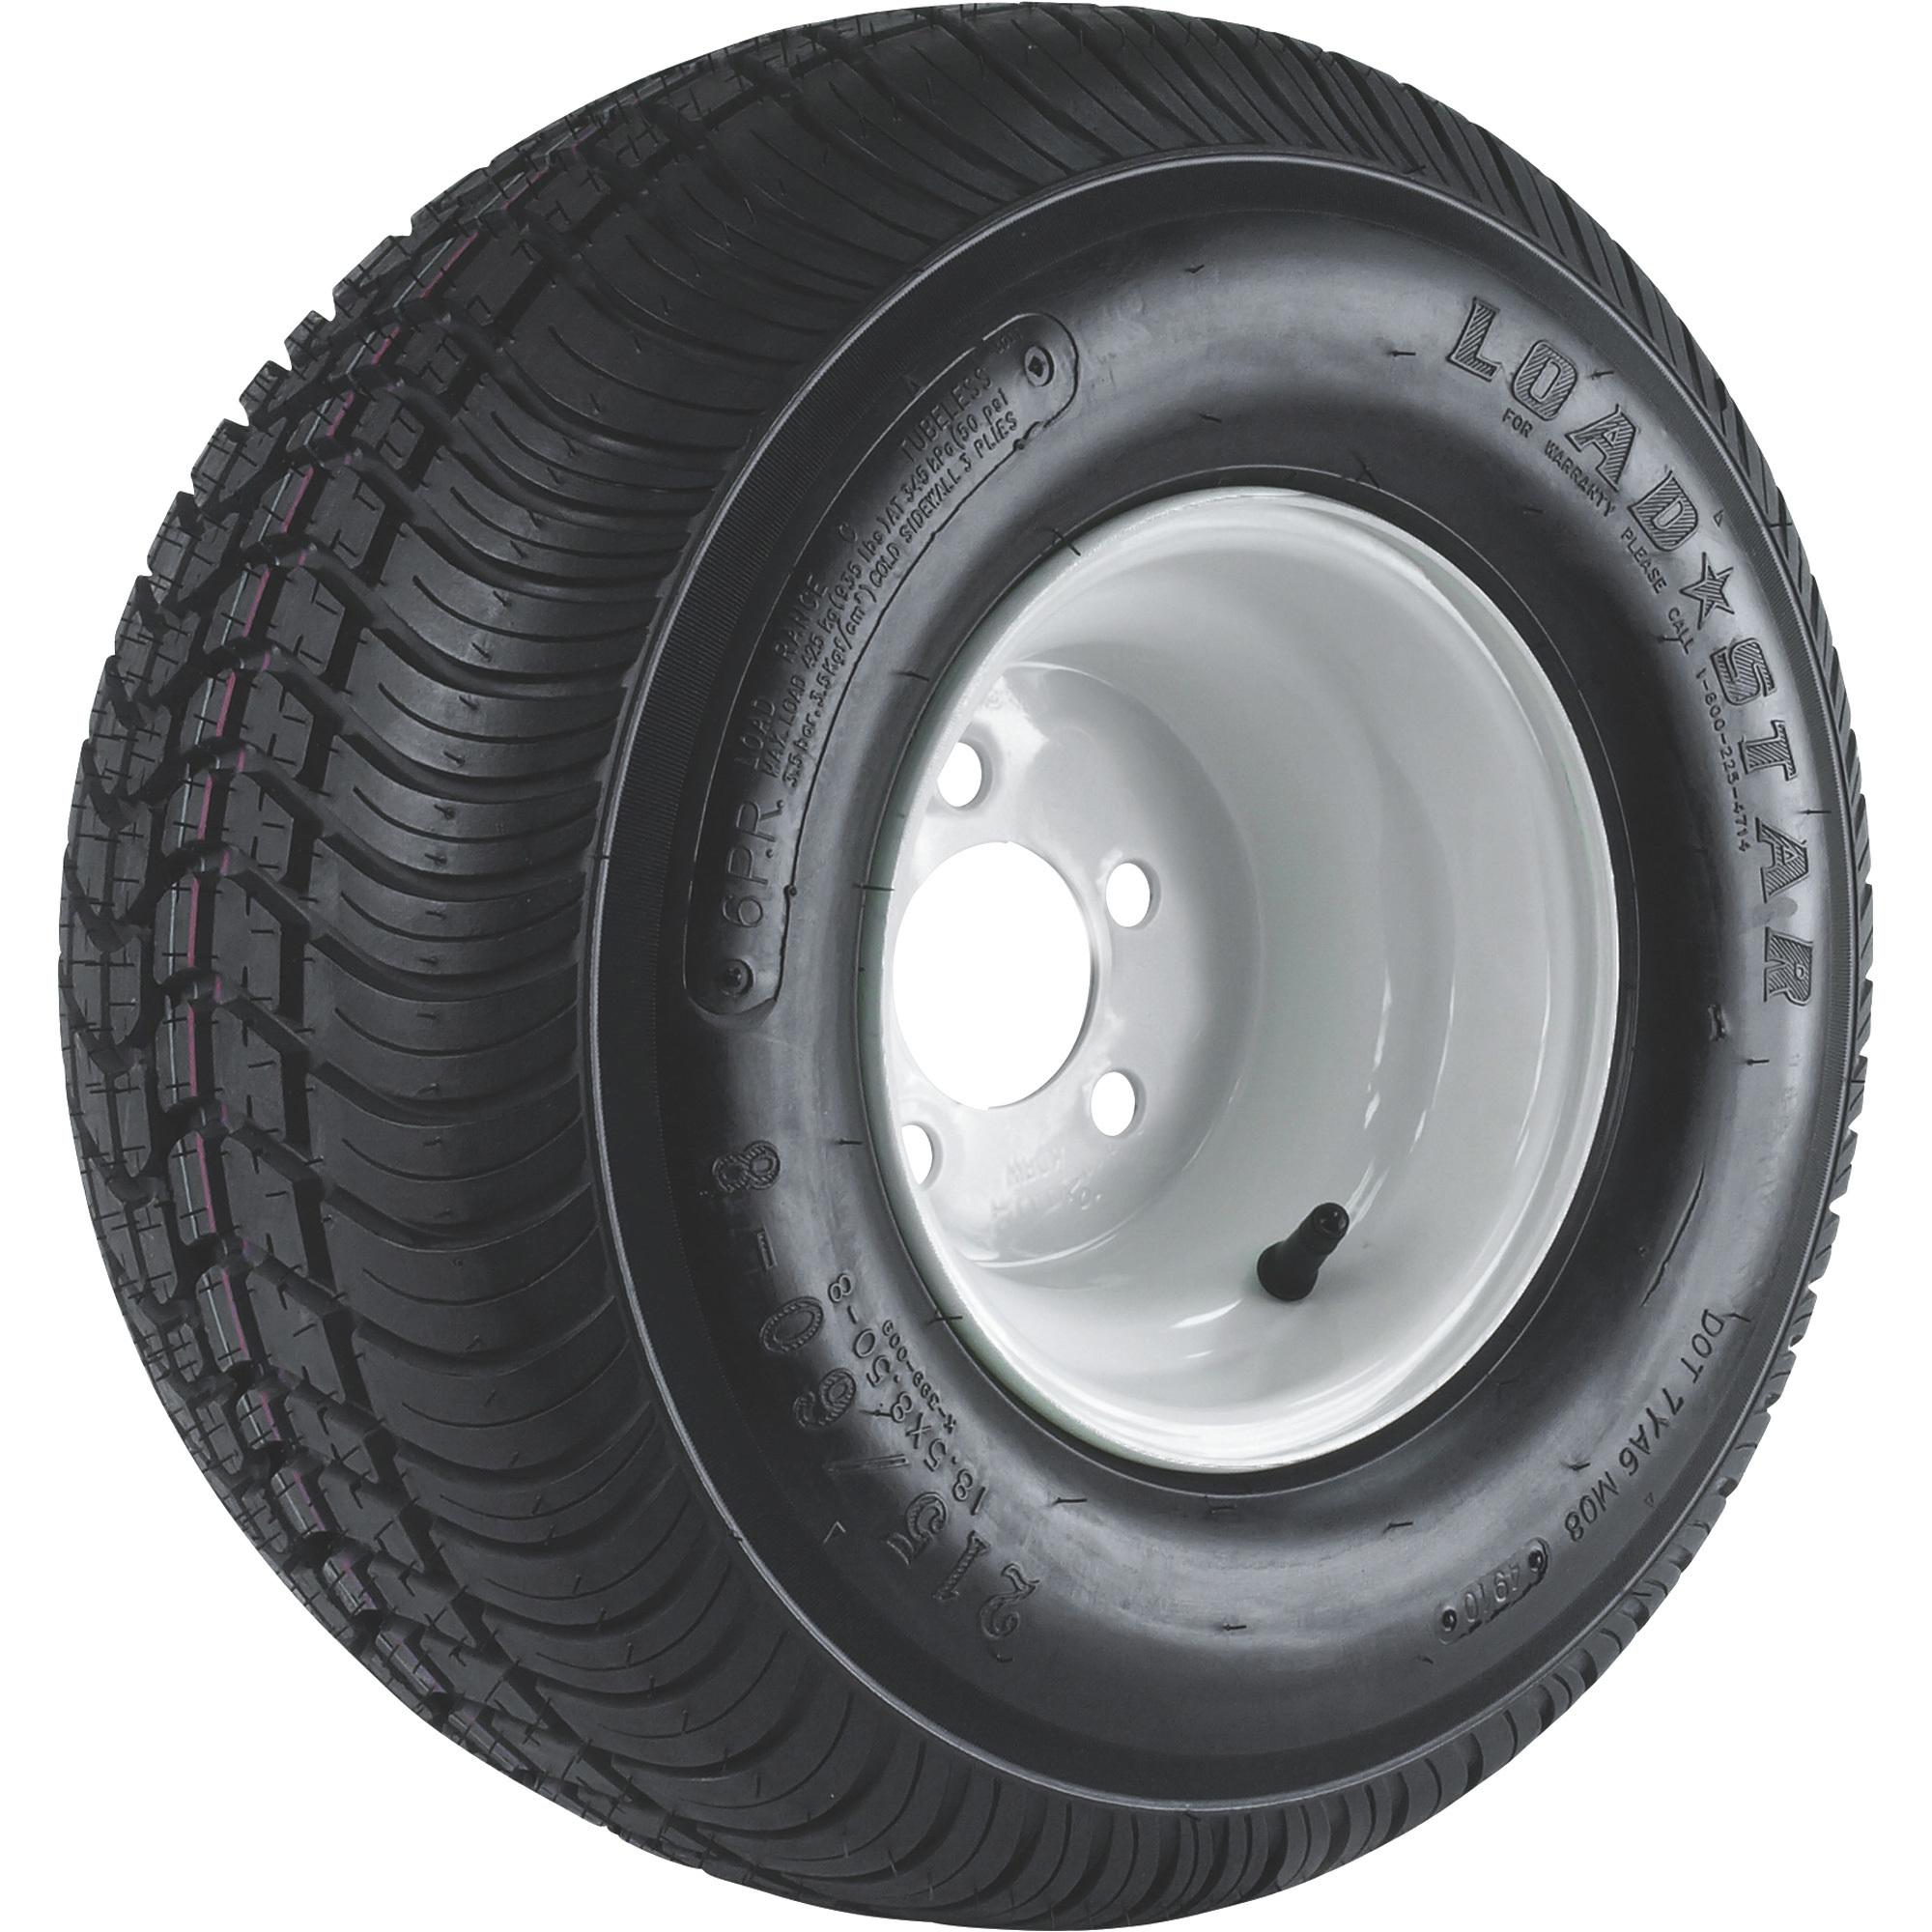 Kenda Loadstar 8Inch Bias-Ply Trailer Tire and Wheel Assembly â 215/60-8, 5-Hole, Load Range C, Model DM2568C-5IN